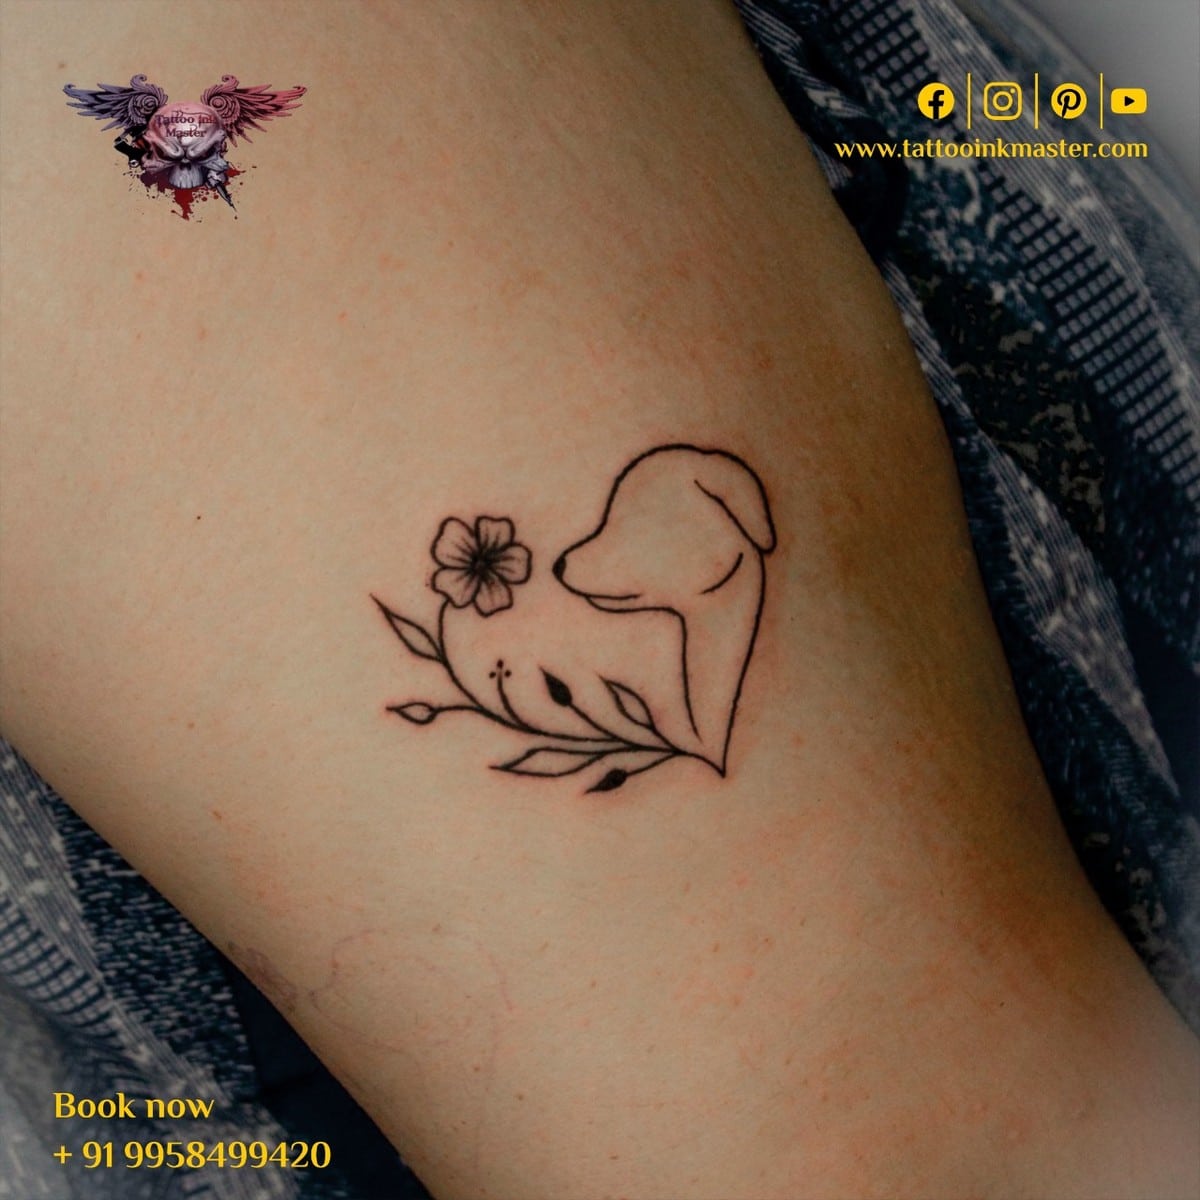 30+ Tattoo Ideas That Symbolize Family - Saved Tattoo